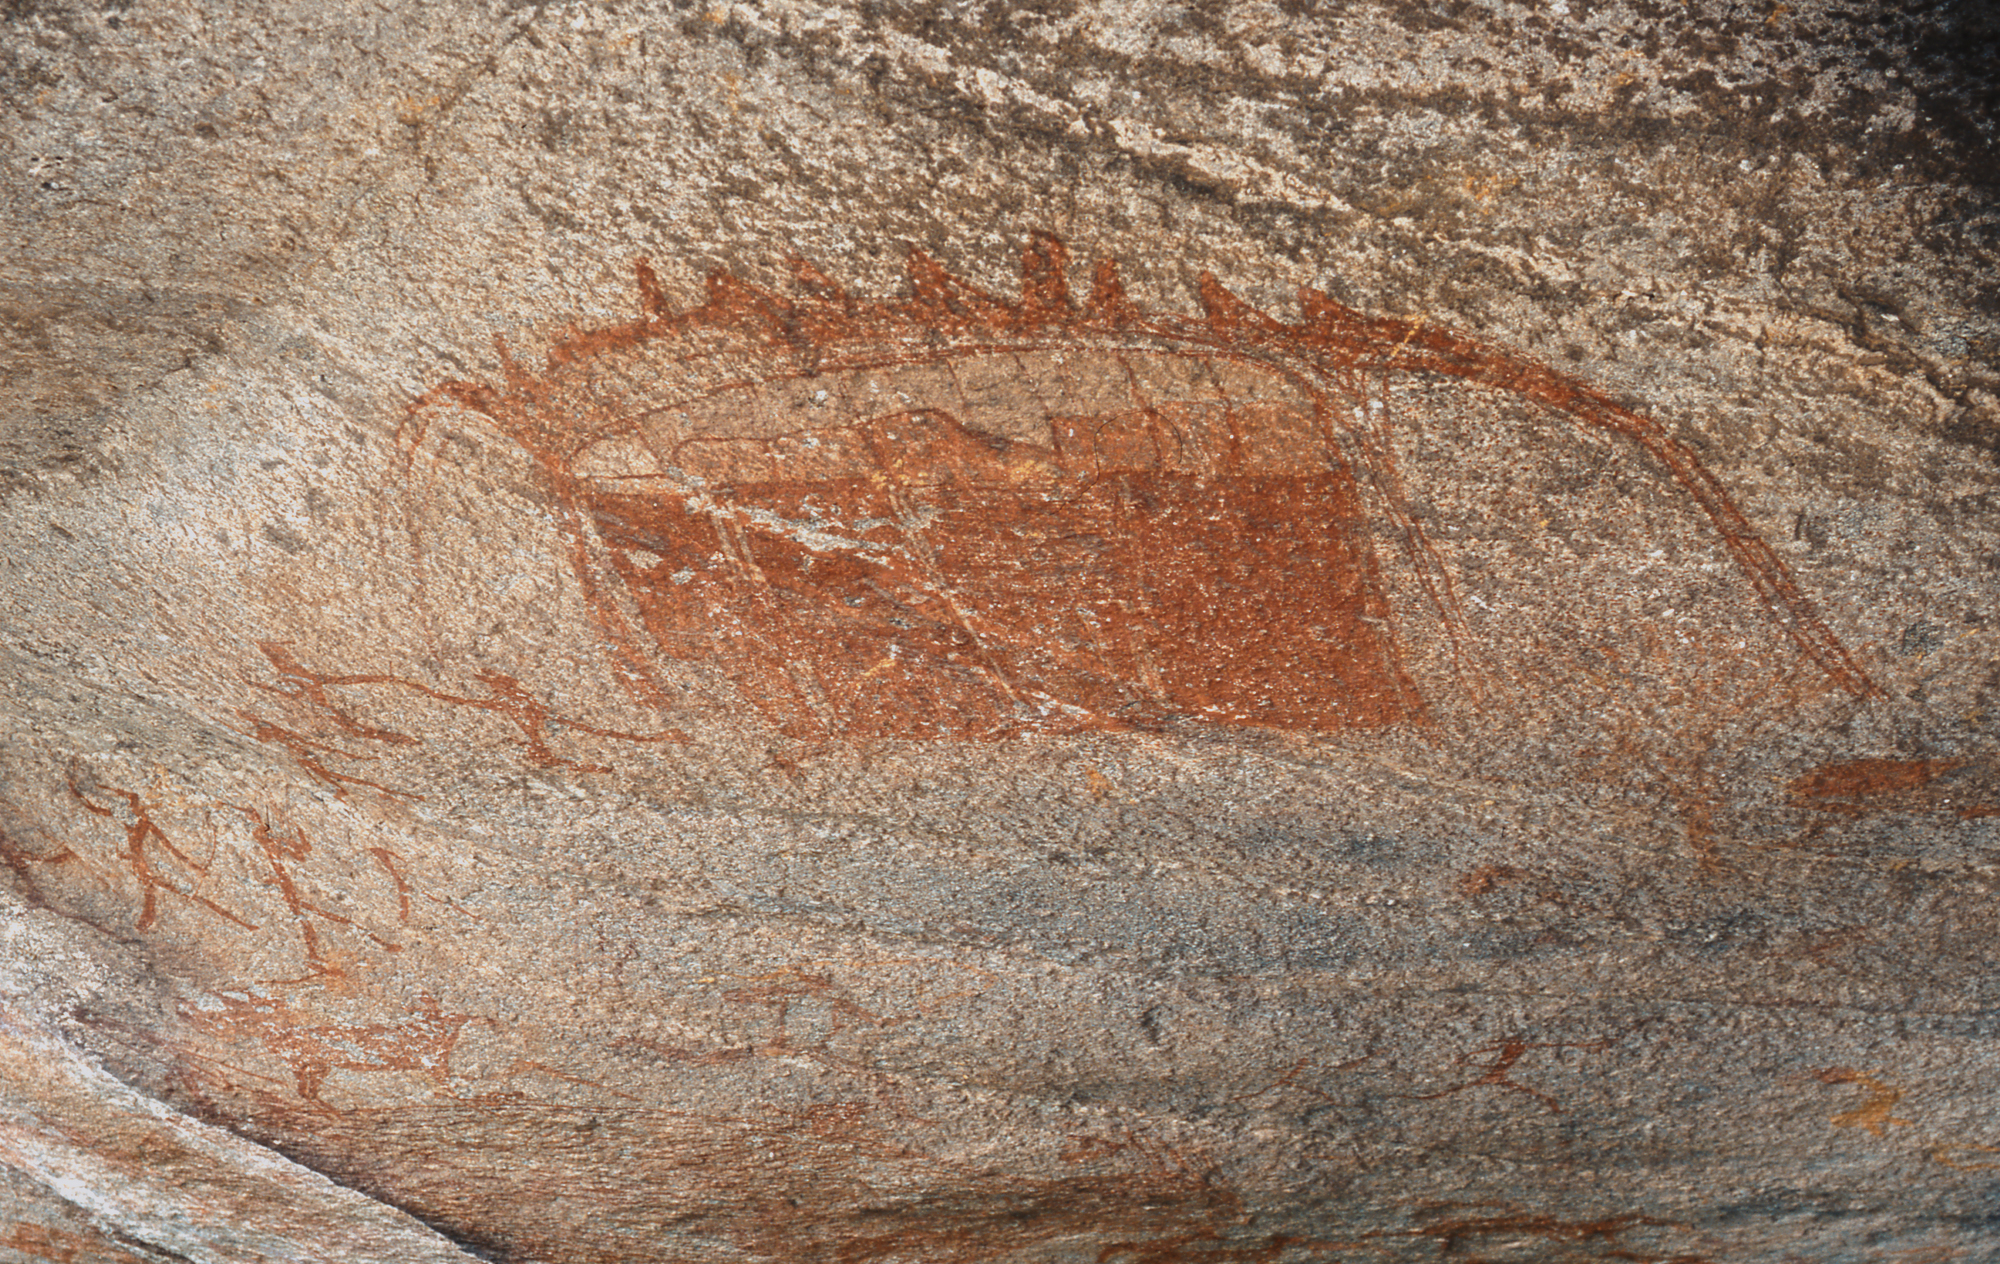 Bradshaw Foundation Matobo Hills Rock Art Paintings Africa African UNESCO World Heritage Site Zimbabwe